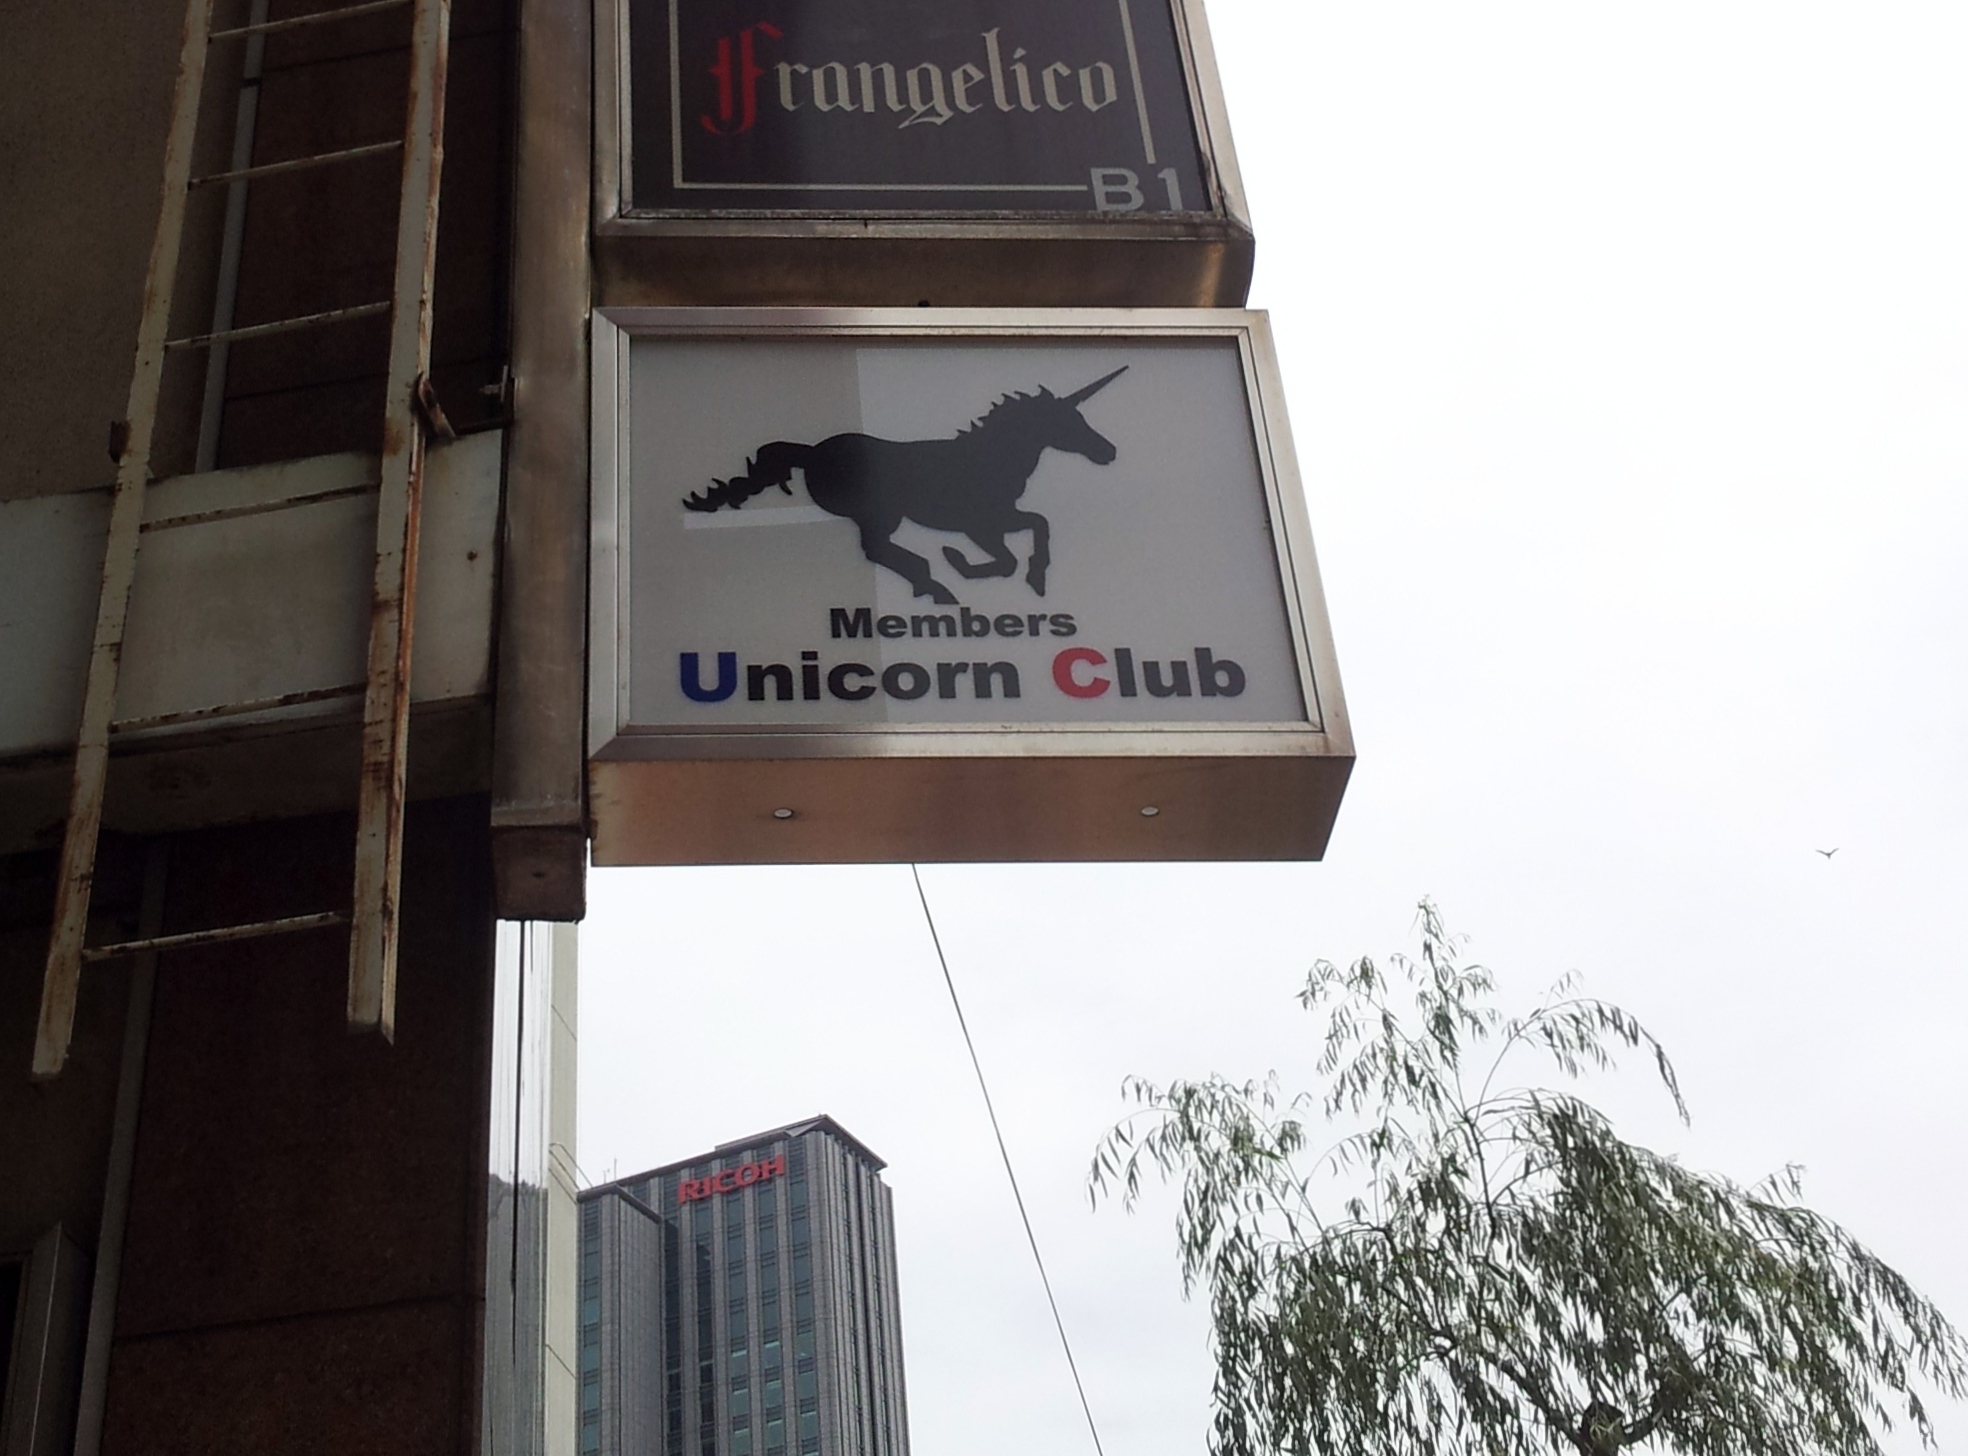 Unicorn Club